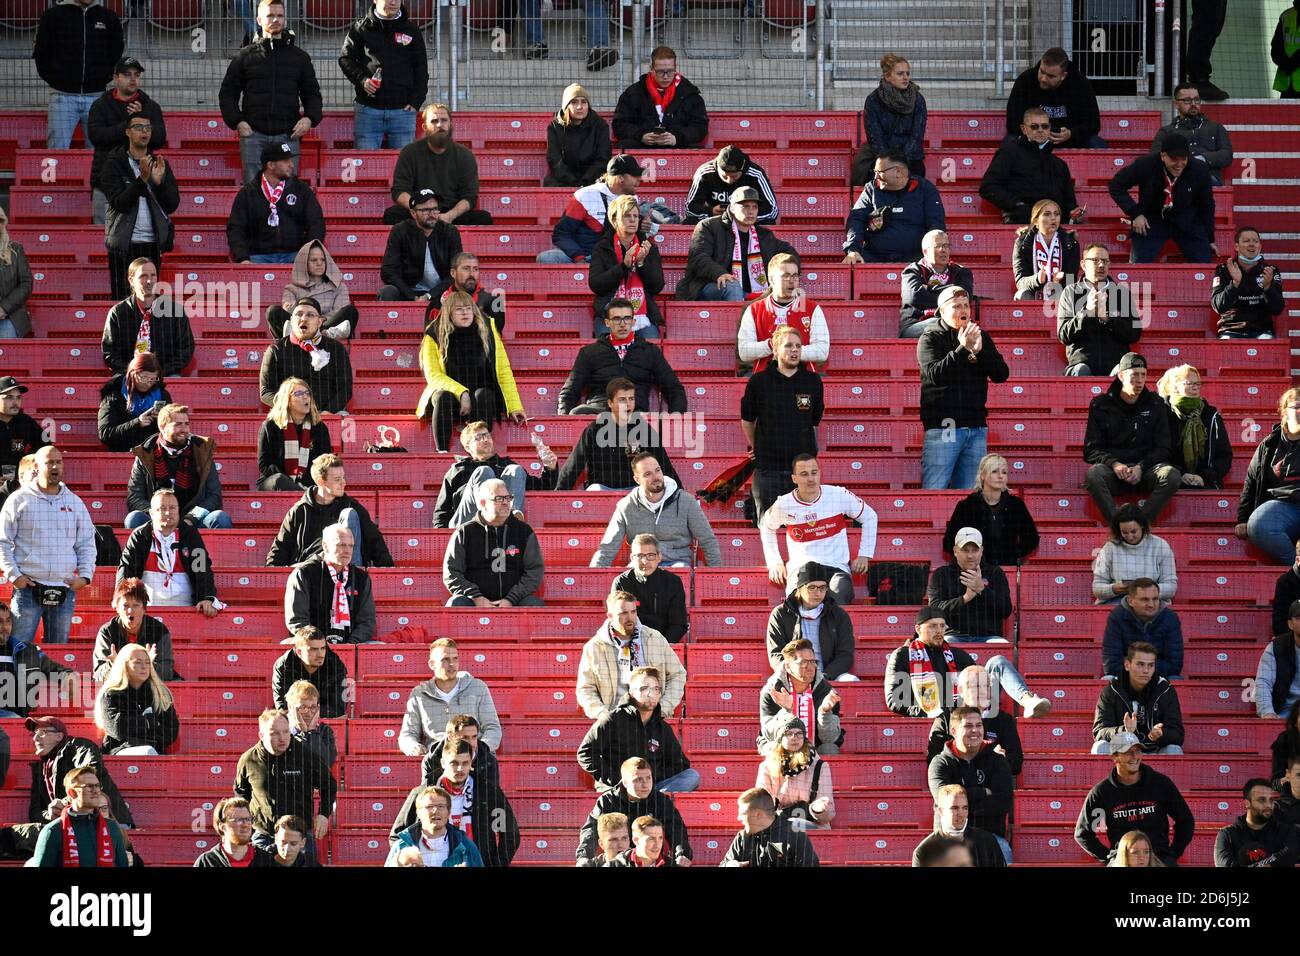 Implementation DFL hygiene concept, fans, spectators in the Bundesliga sit at a distance, VfB Stuttgart, Mercedes-Benz Arena, Corona crisis Stock Photo